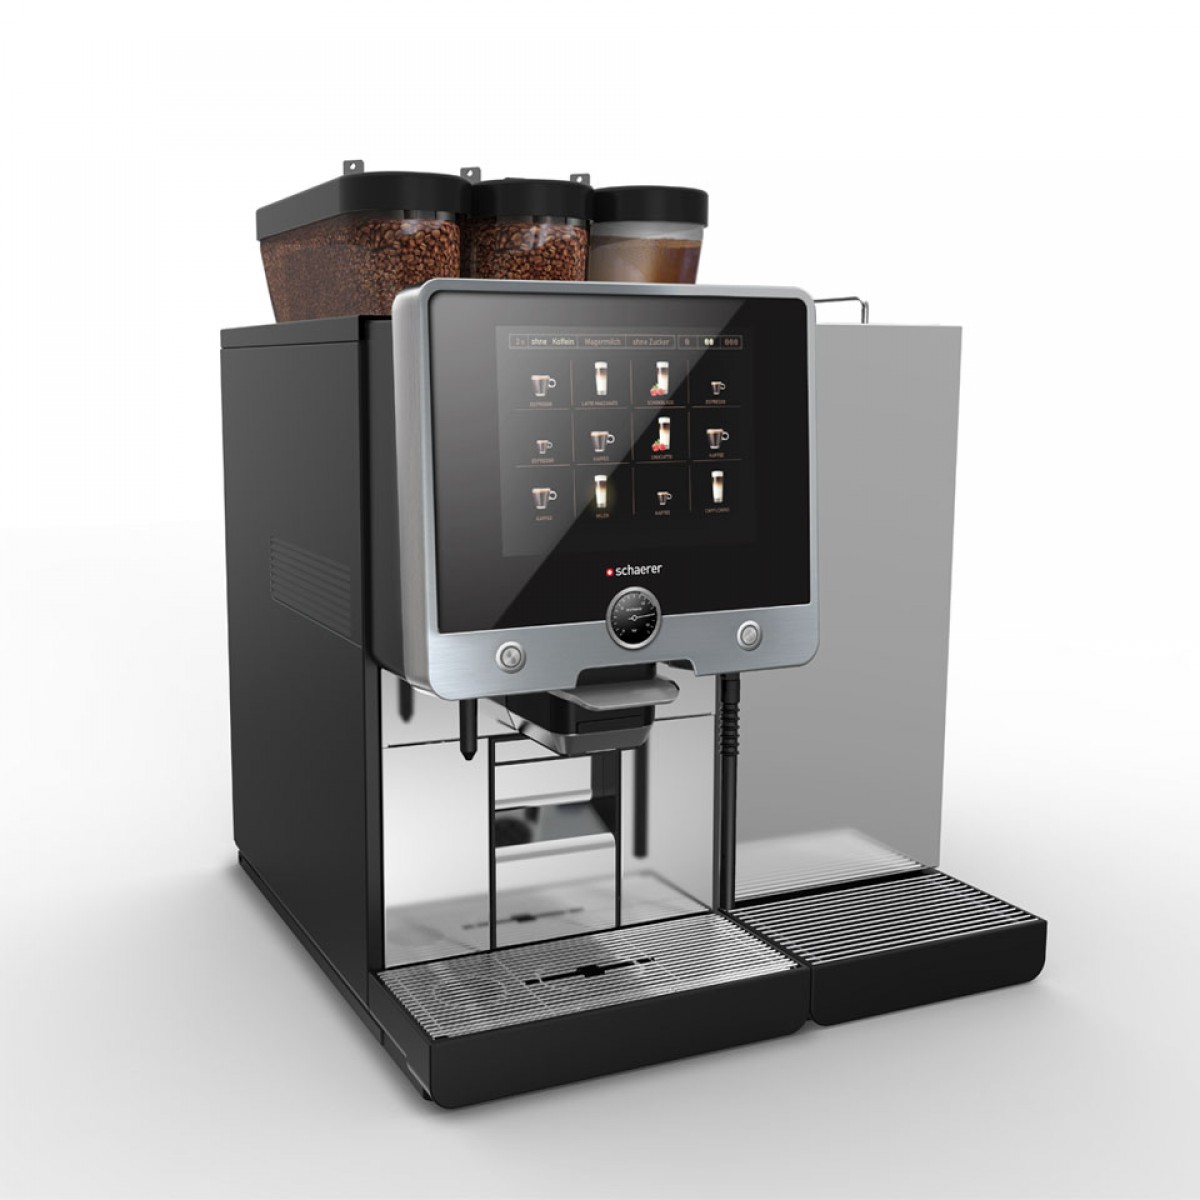 00 Kacheln milani design consulting agency Schaerer Coffe Kaffeemaschine Product Industrial Kaffee2